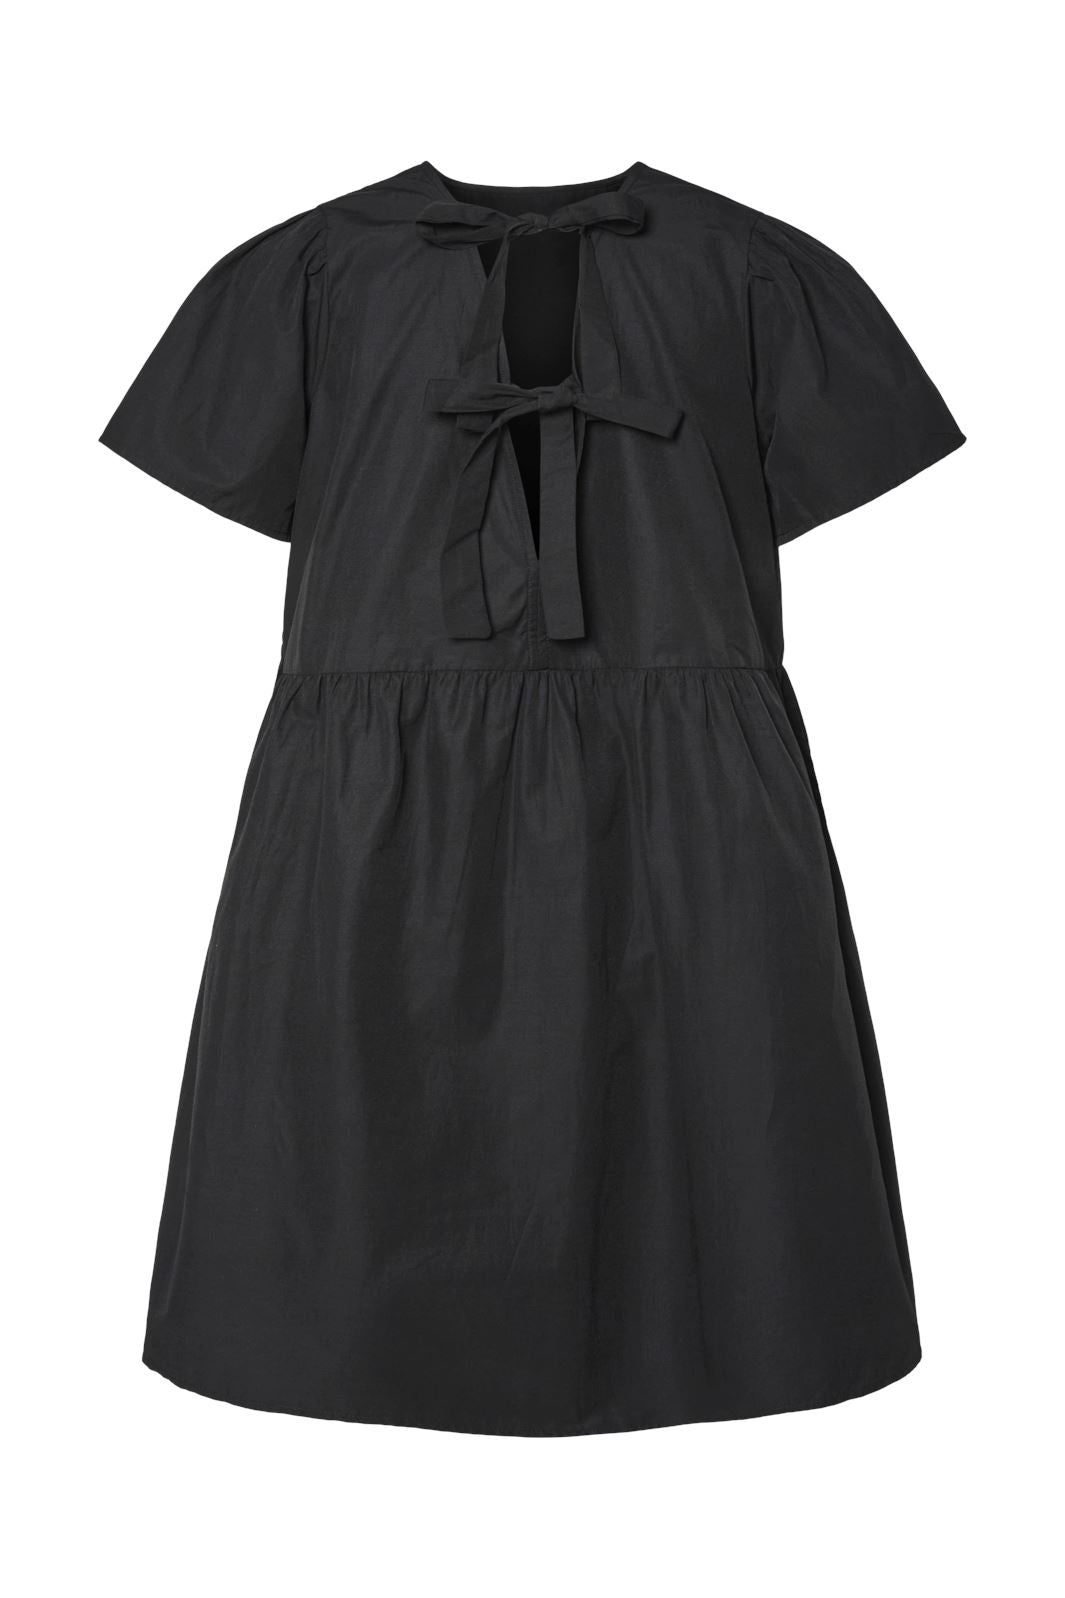 Pieces - Pcula Ss O-Neck Reversible Bow Dress - 4704157 Black